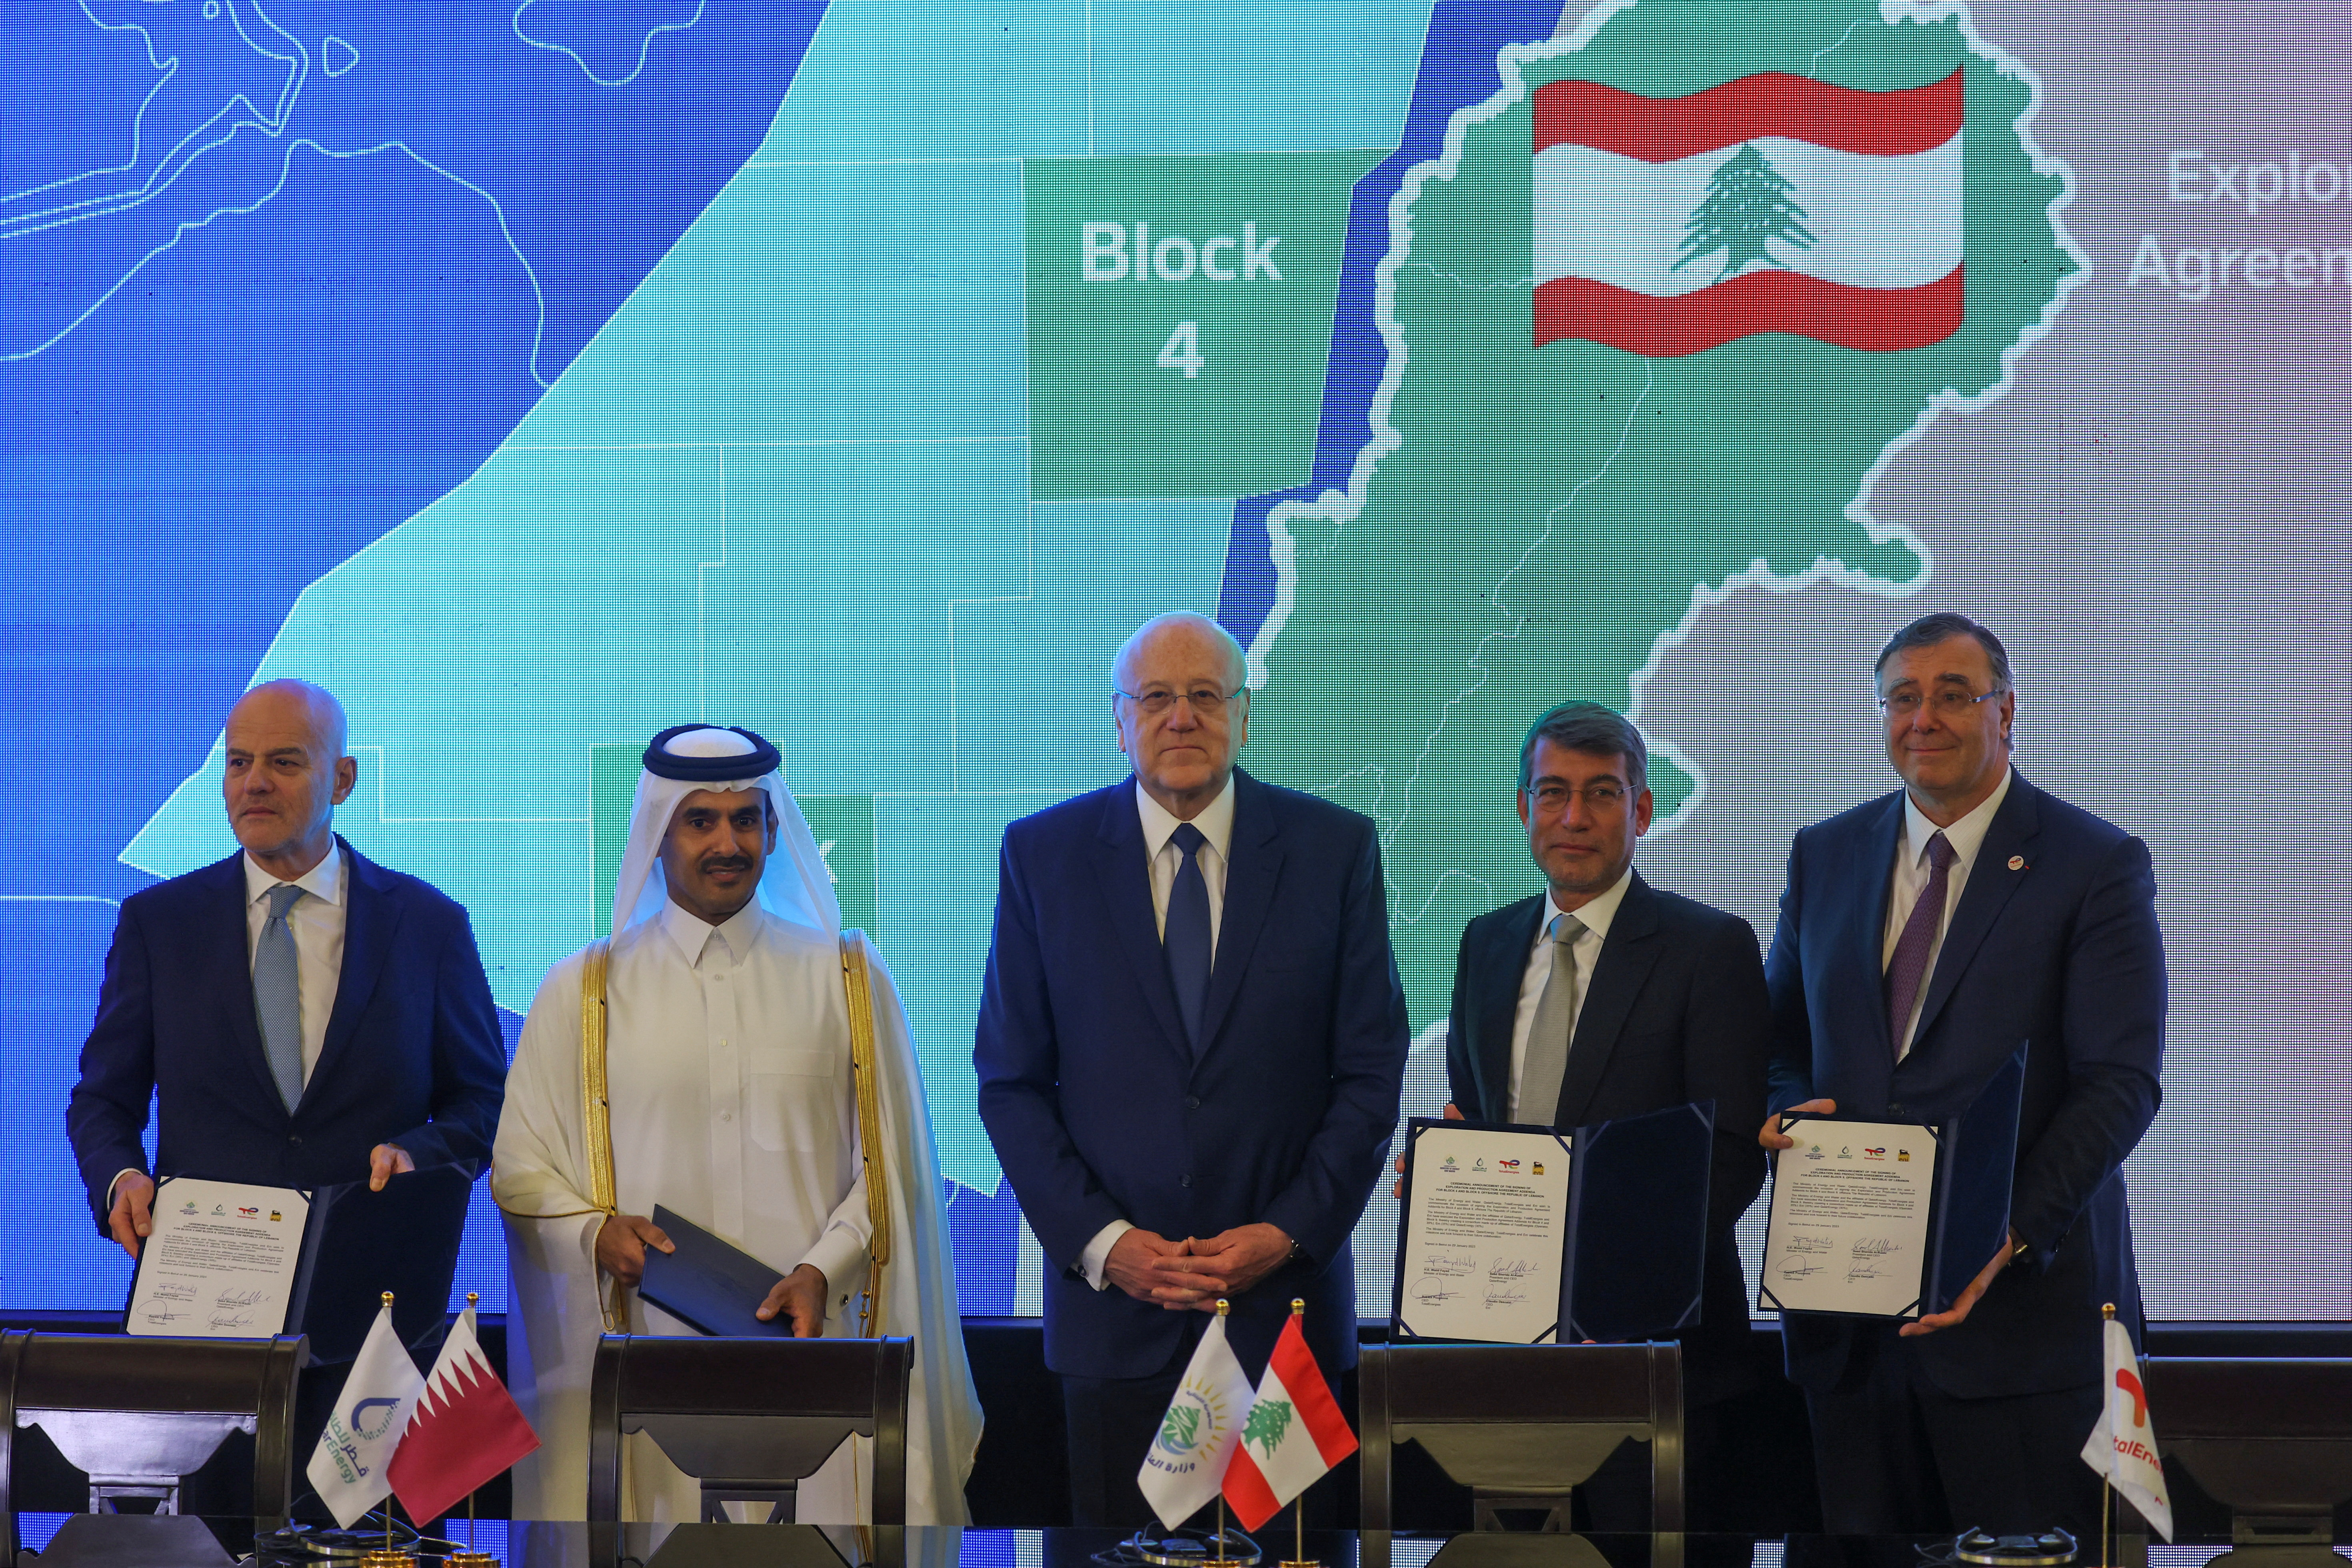 QatarEnergy joins three-way consortium to explore Lebanon offshore gas